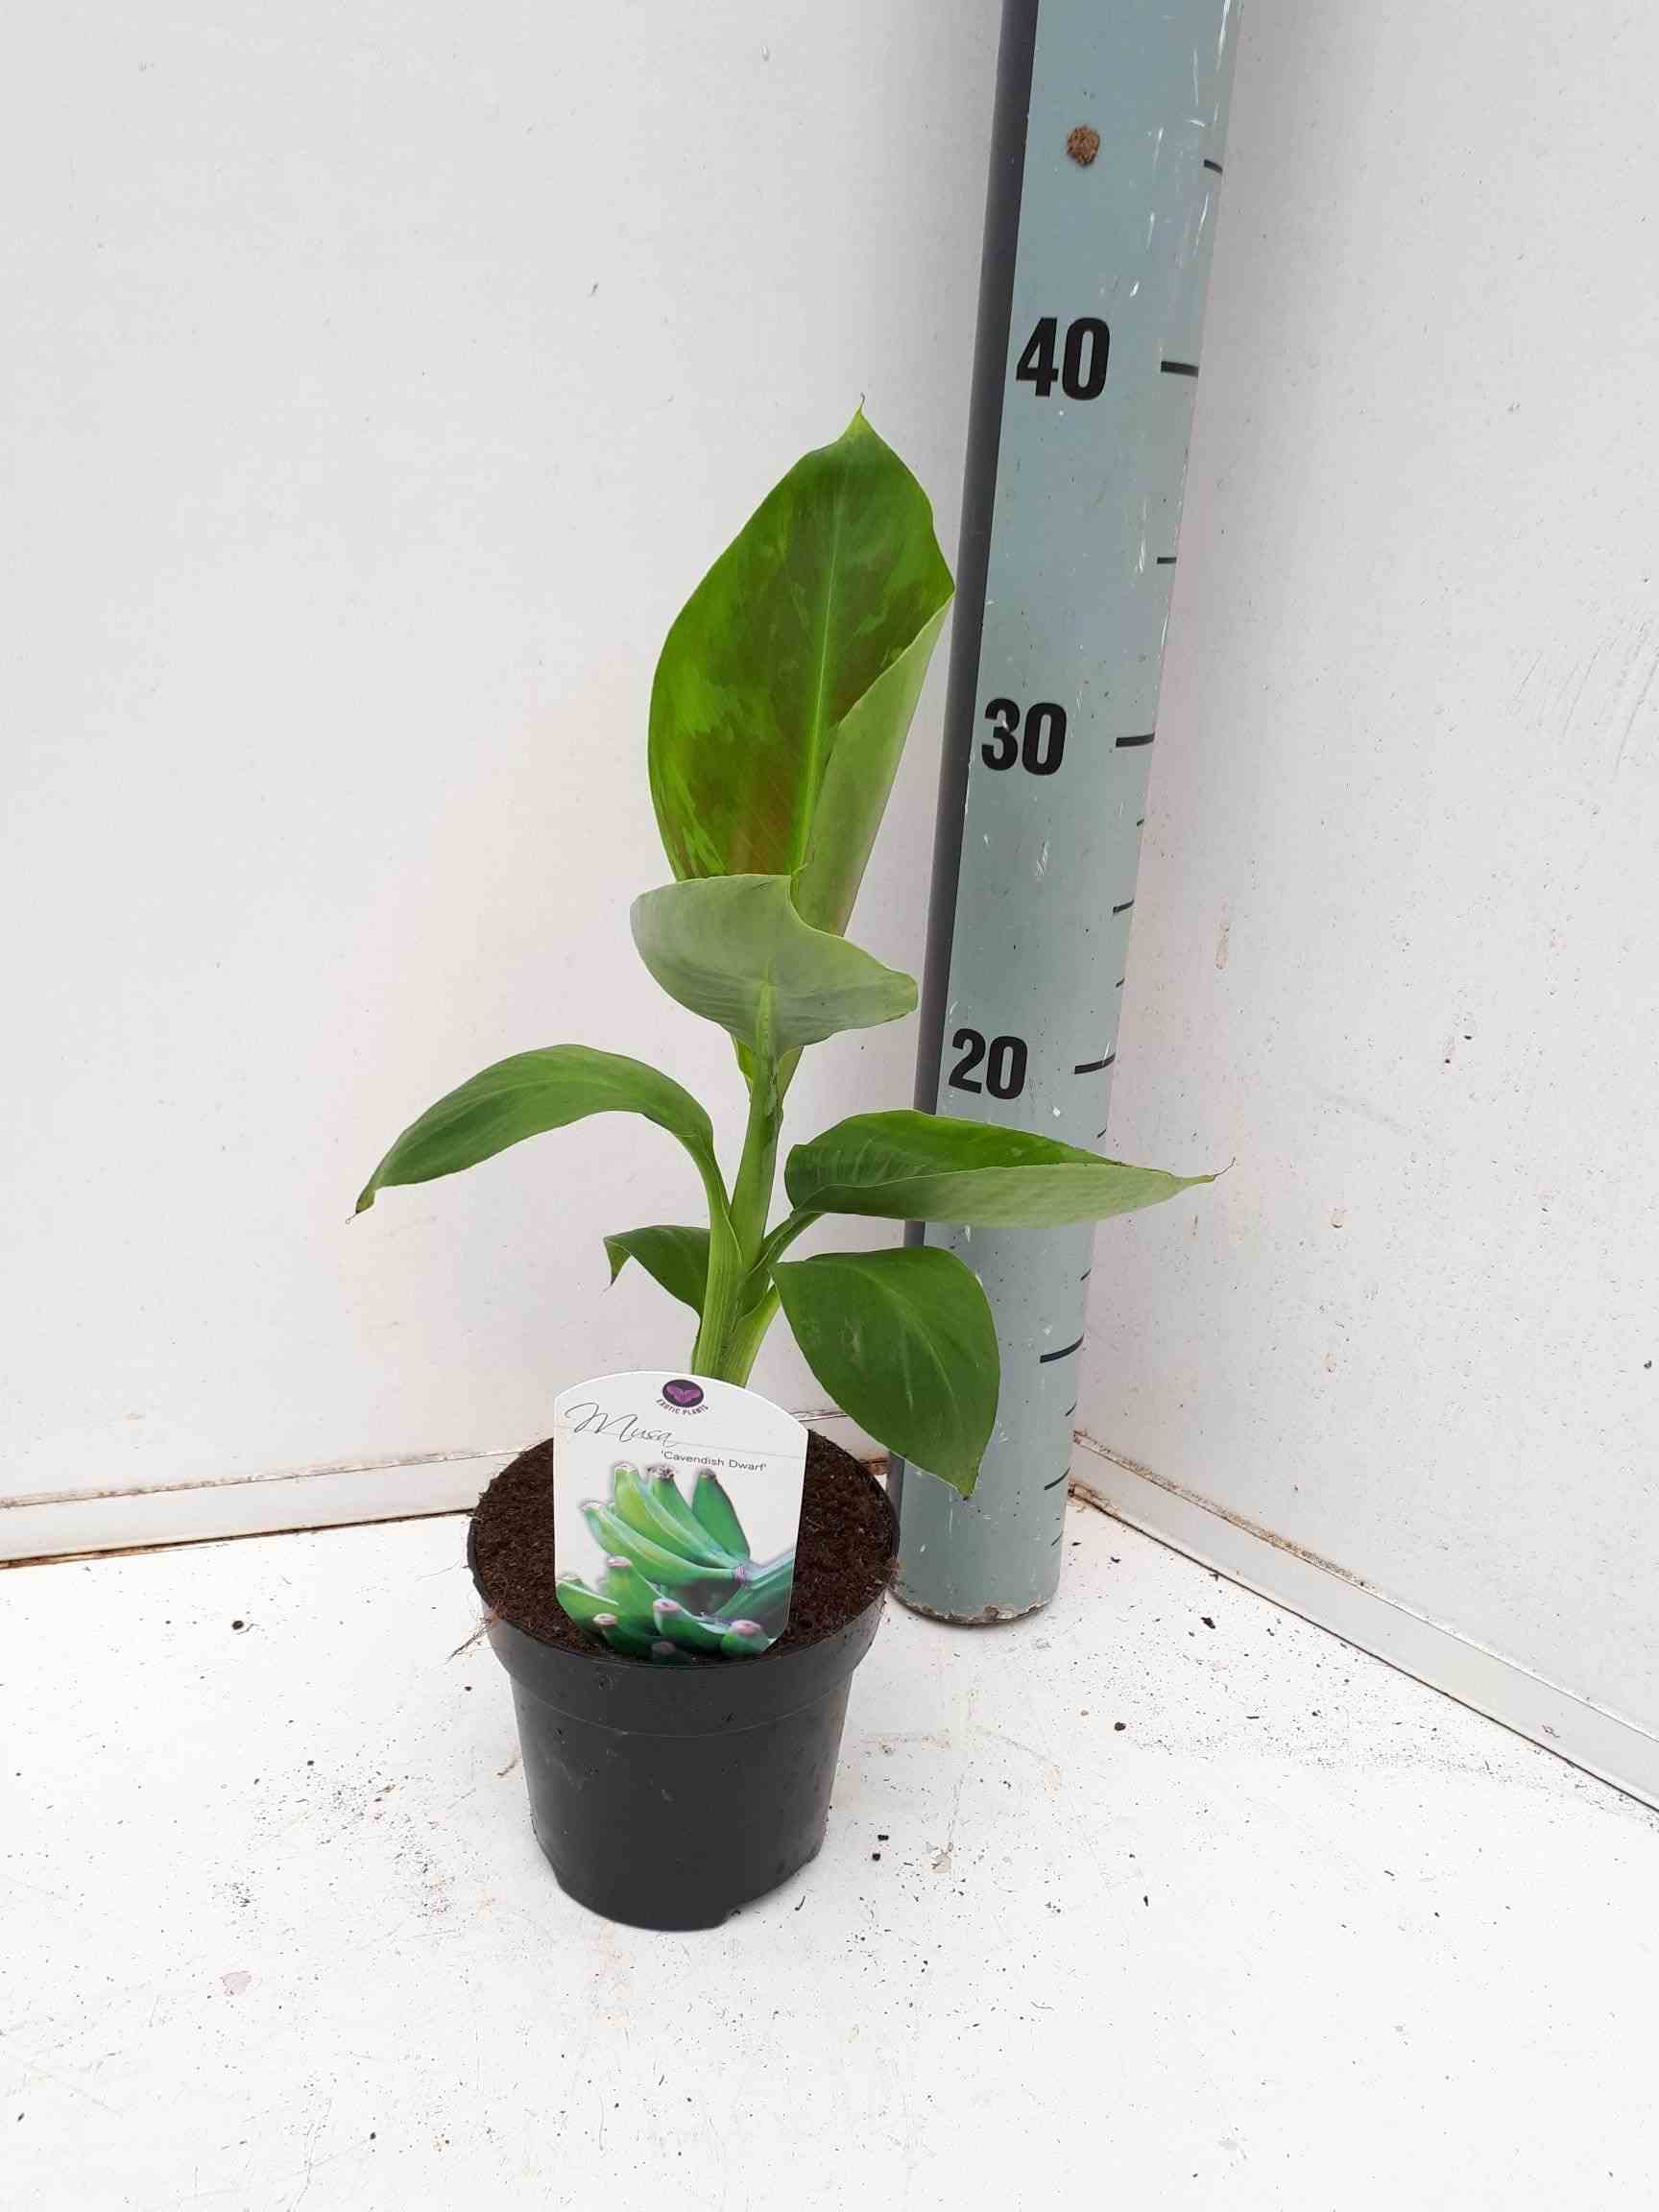 Bananier musa acuminata cv. Super dwarf cavendish   rose - taille pot de 40 litres ? 100/120 cm